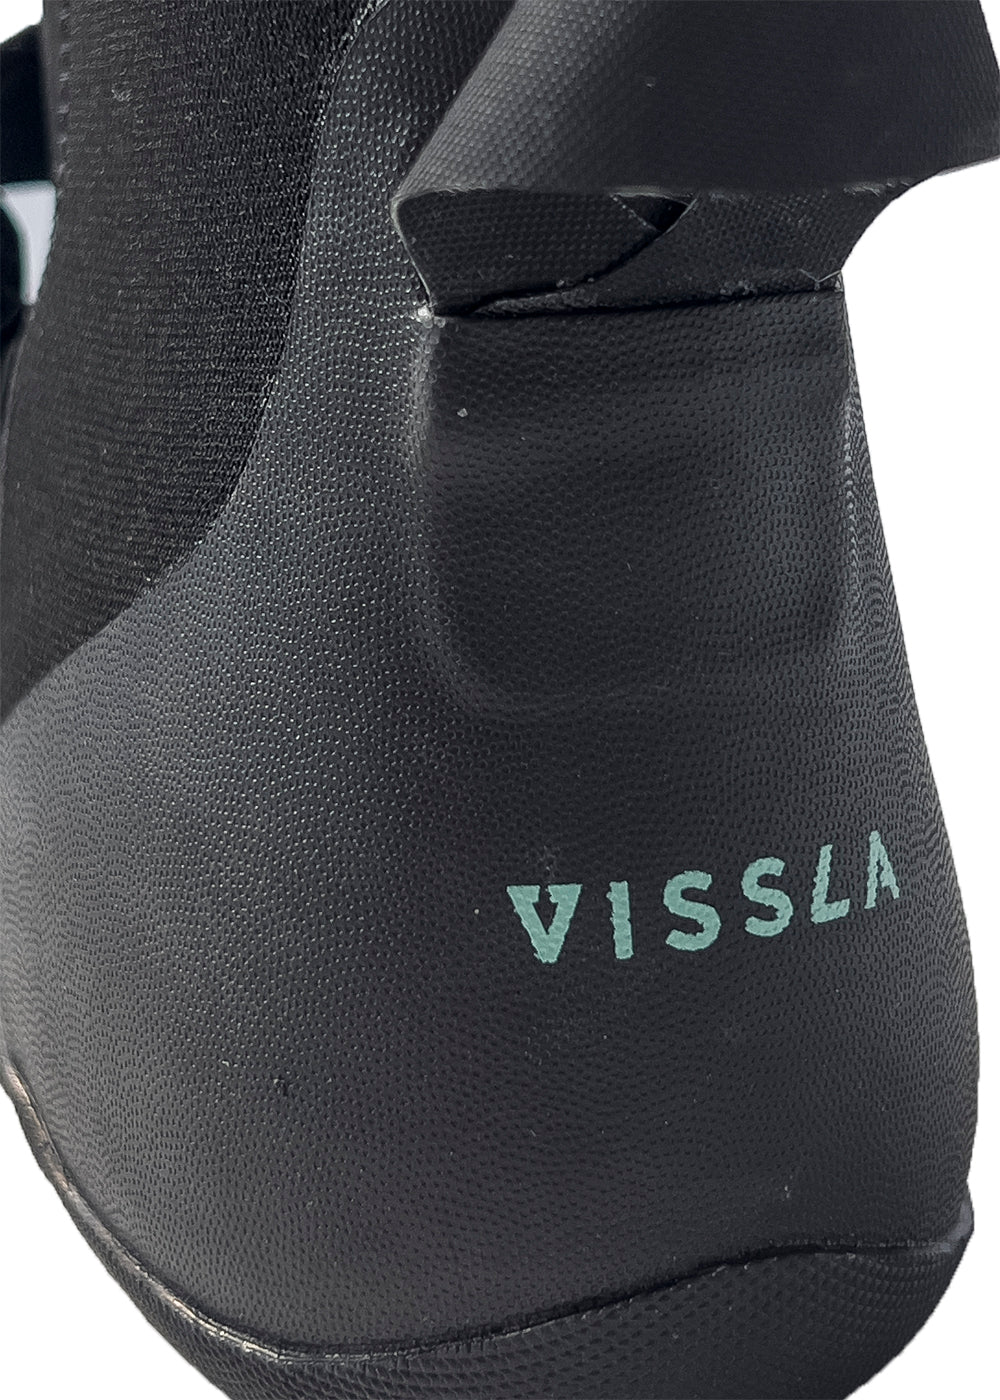 Calzari Vissla High Seas II 3mm Split Toe Wetsuit Boot